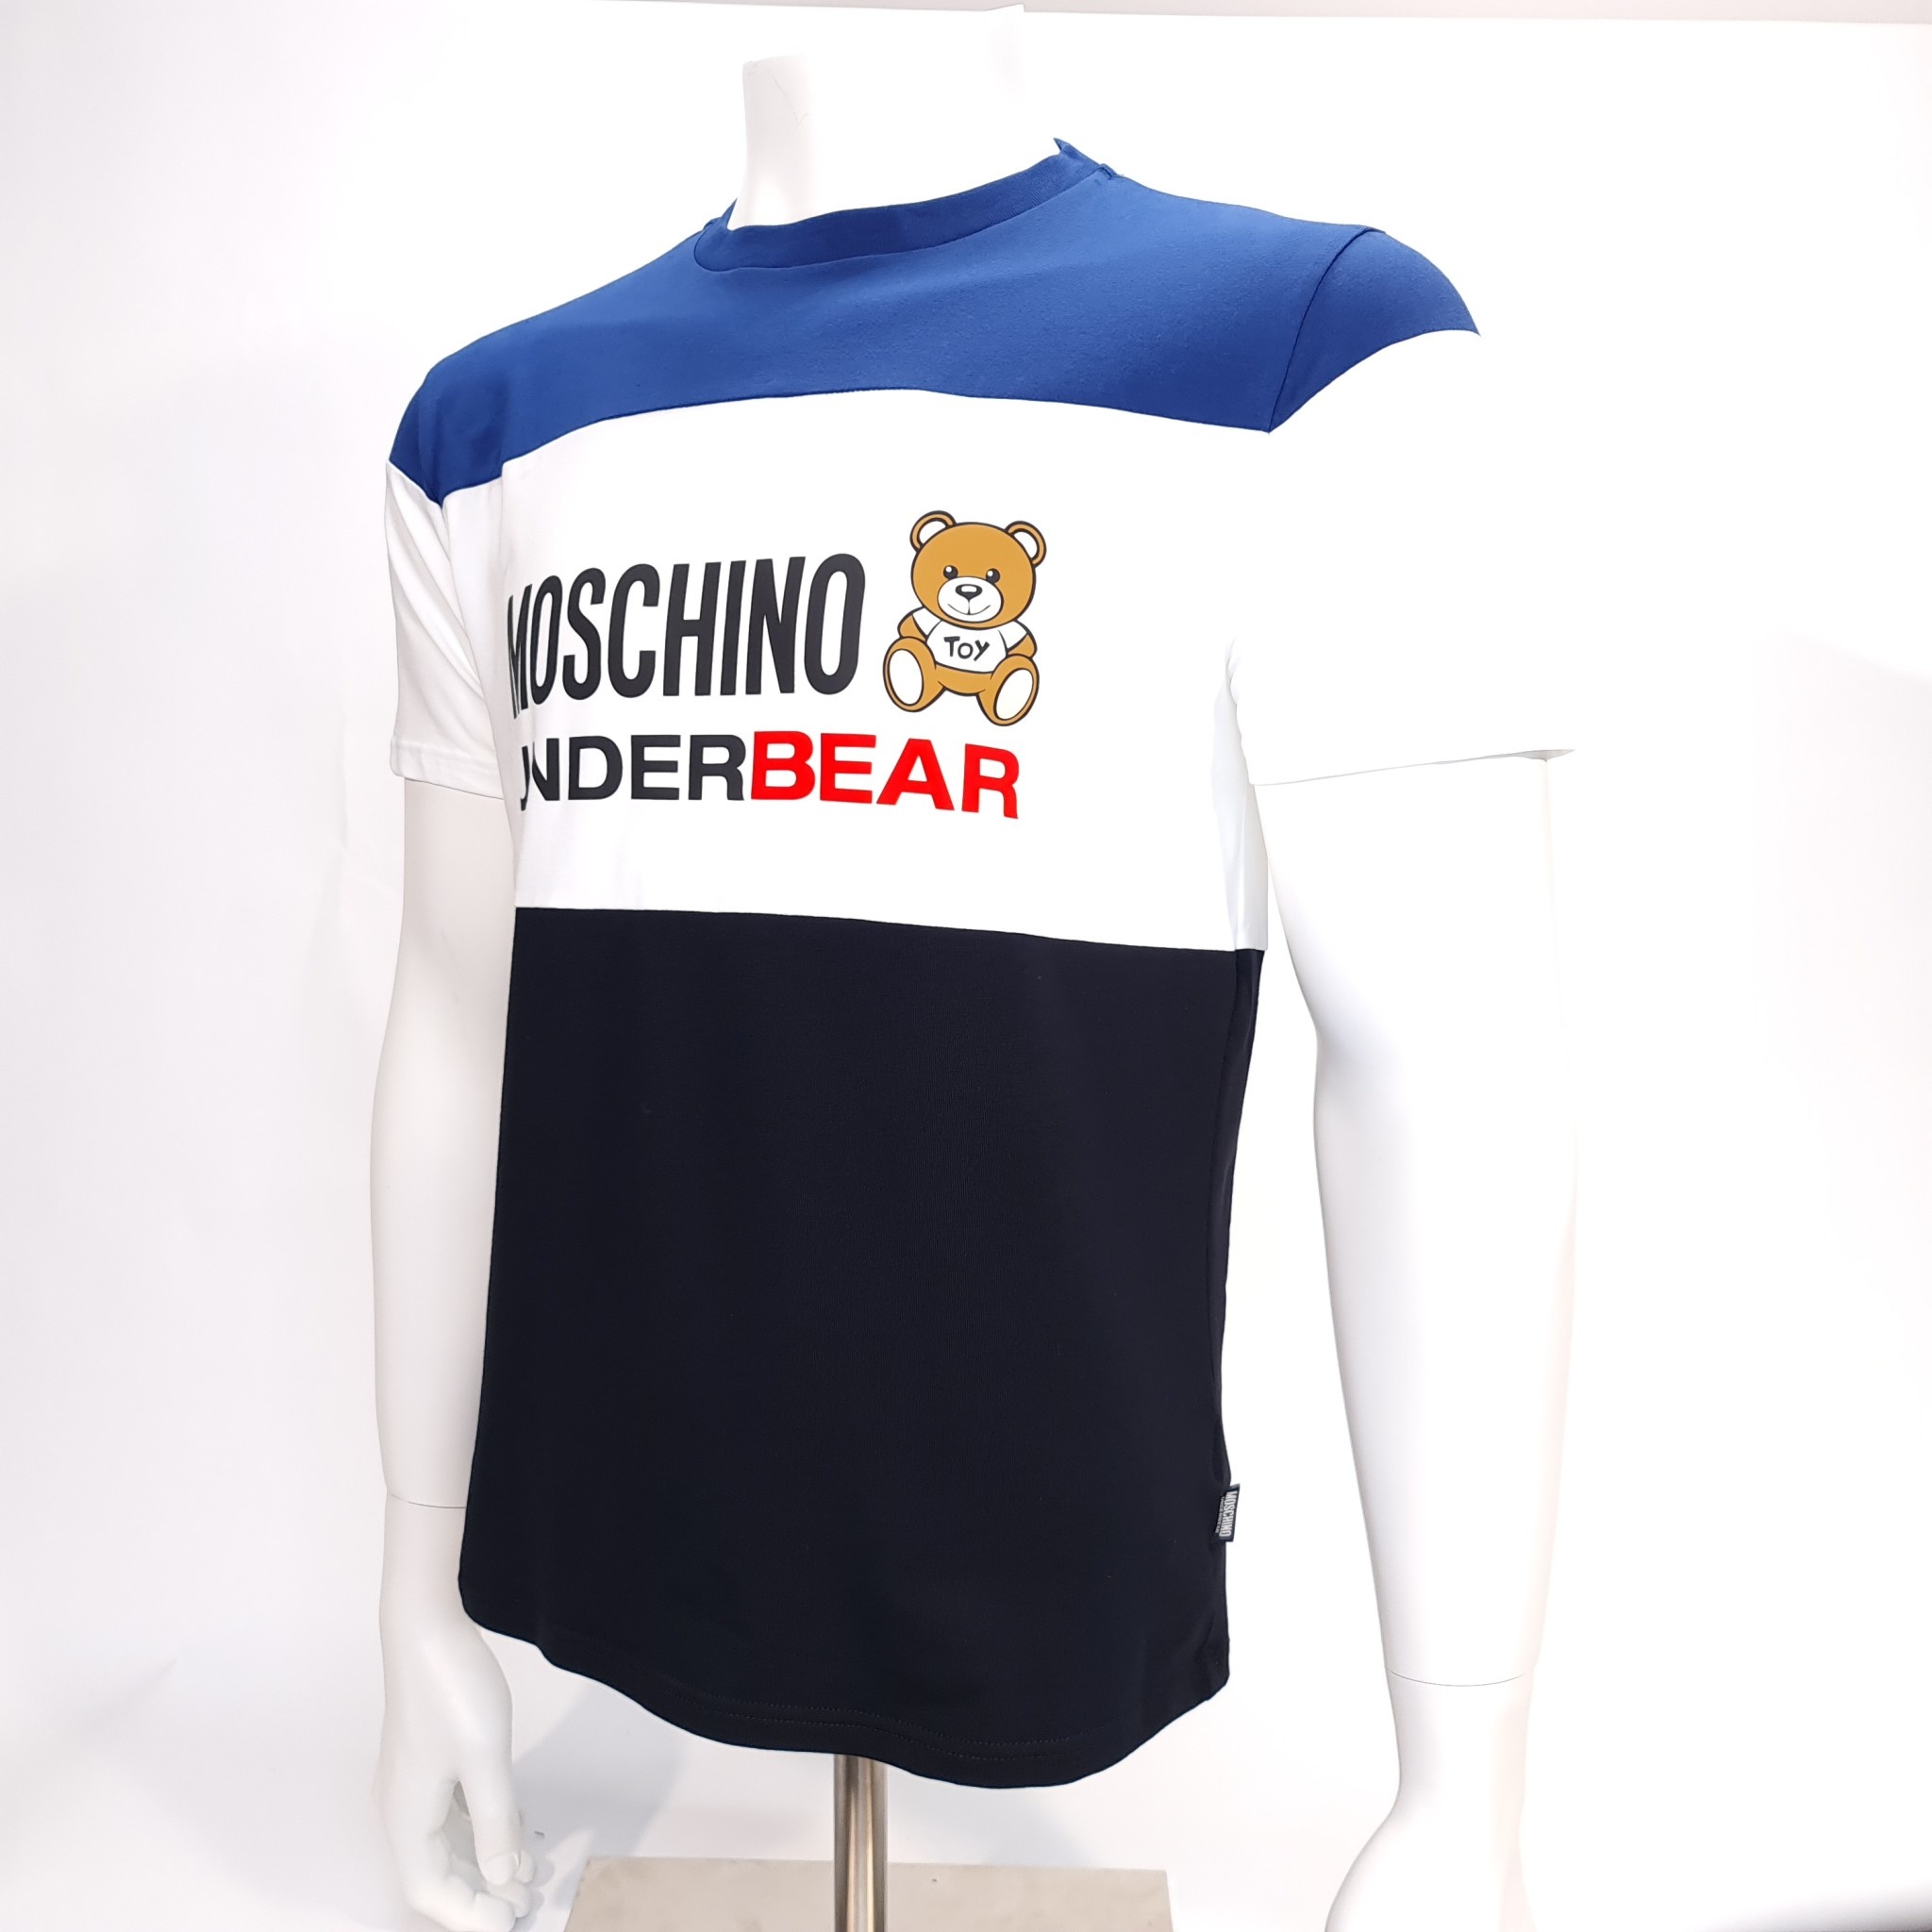 moschino underbear t-shirt